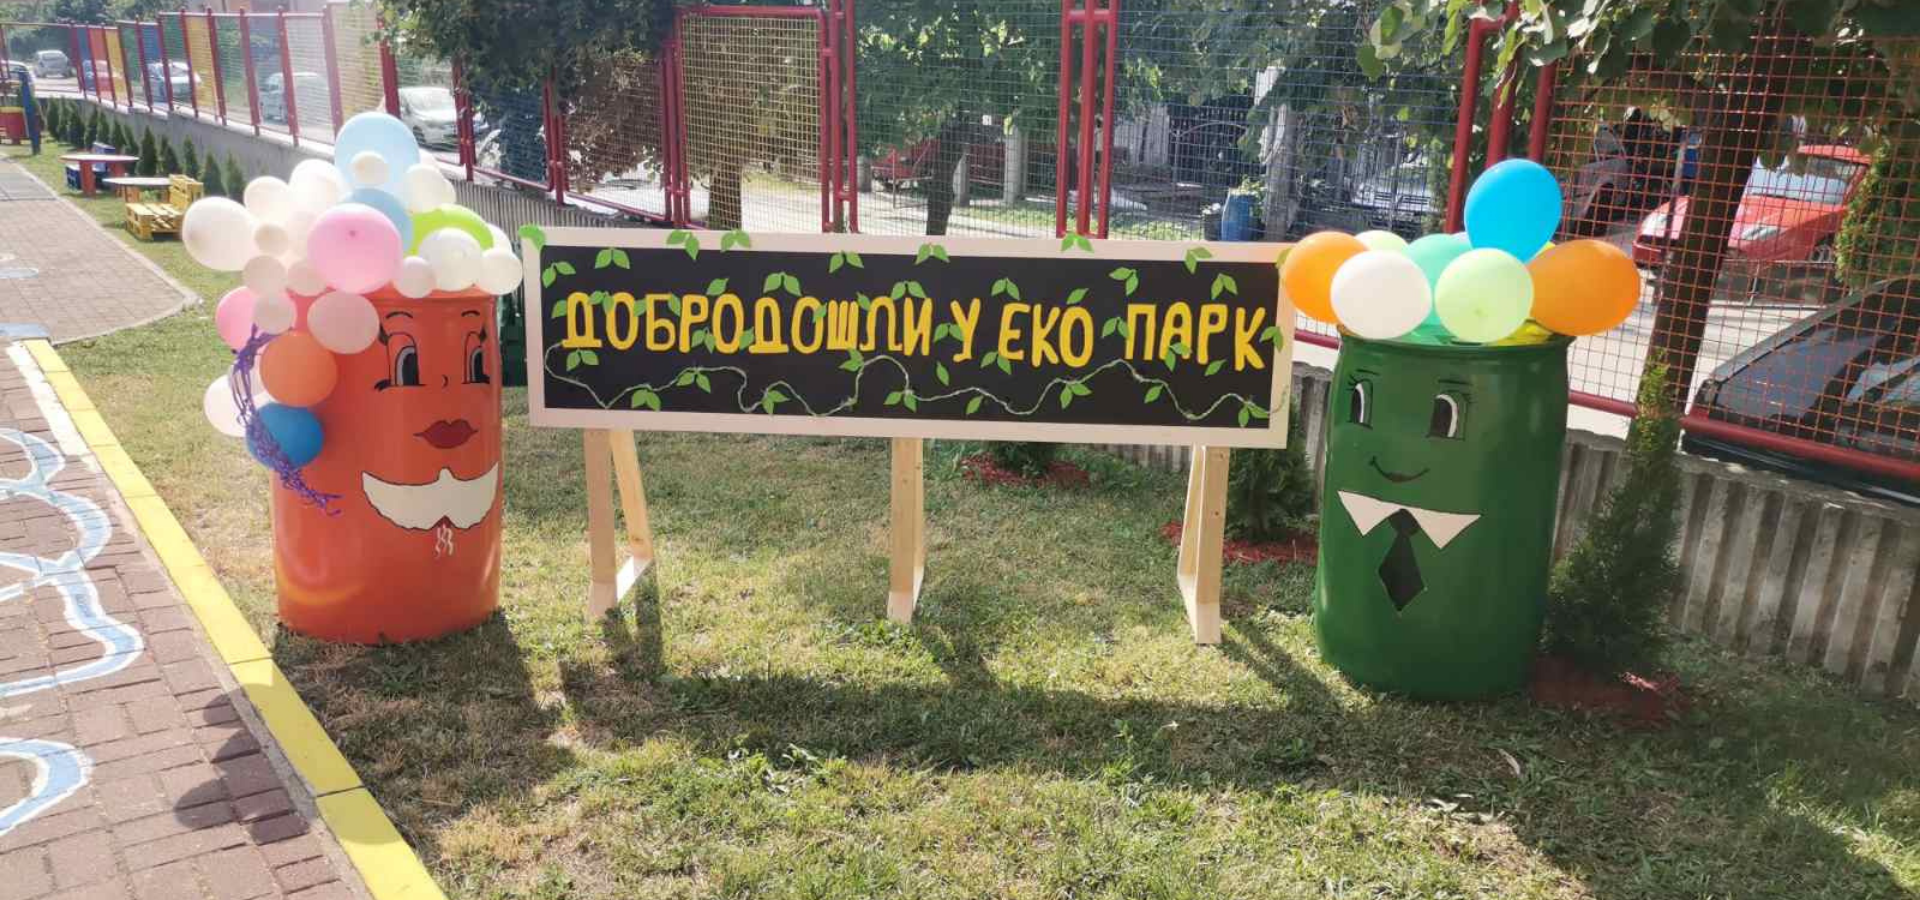 Otvoren prvi eko park u Vranju